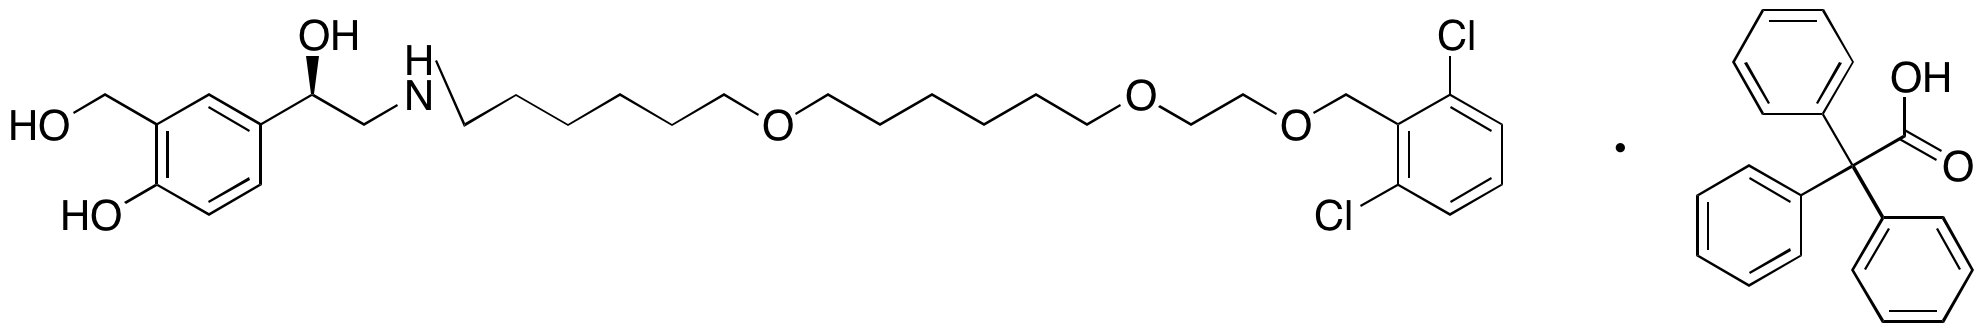 (R)-1-(2,6-Dichlorophenyl)-21-(4-hydroxy-3-(hydroxymethyl)phenyl)-2,5,12-trioxa-19-azahenicosan-21-ol 2,2,2-Triphenylacetate